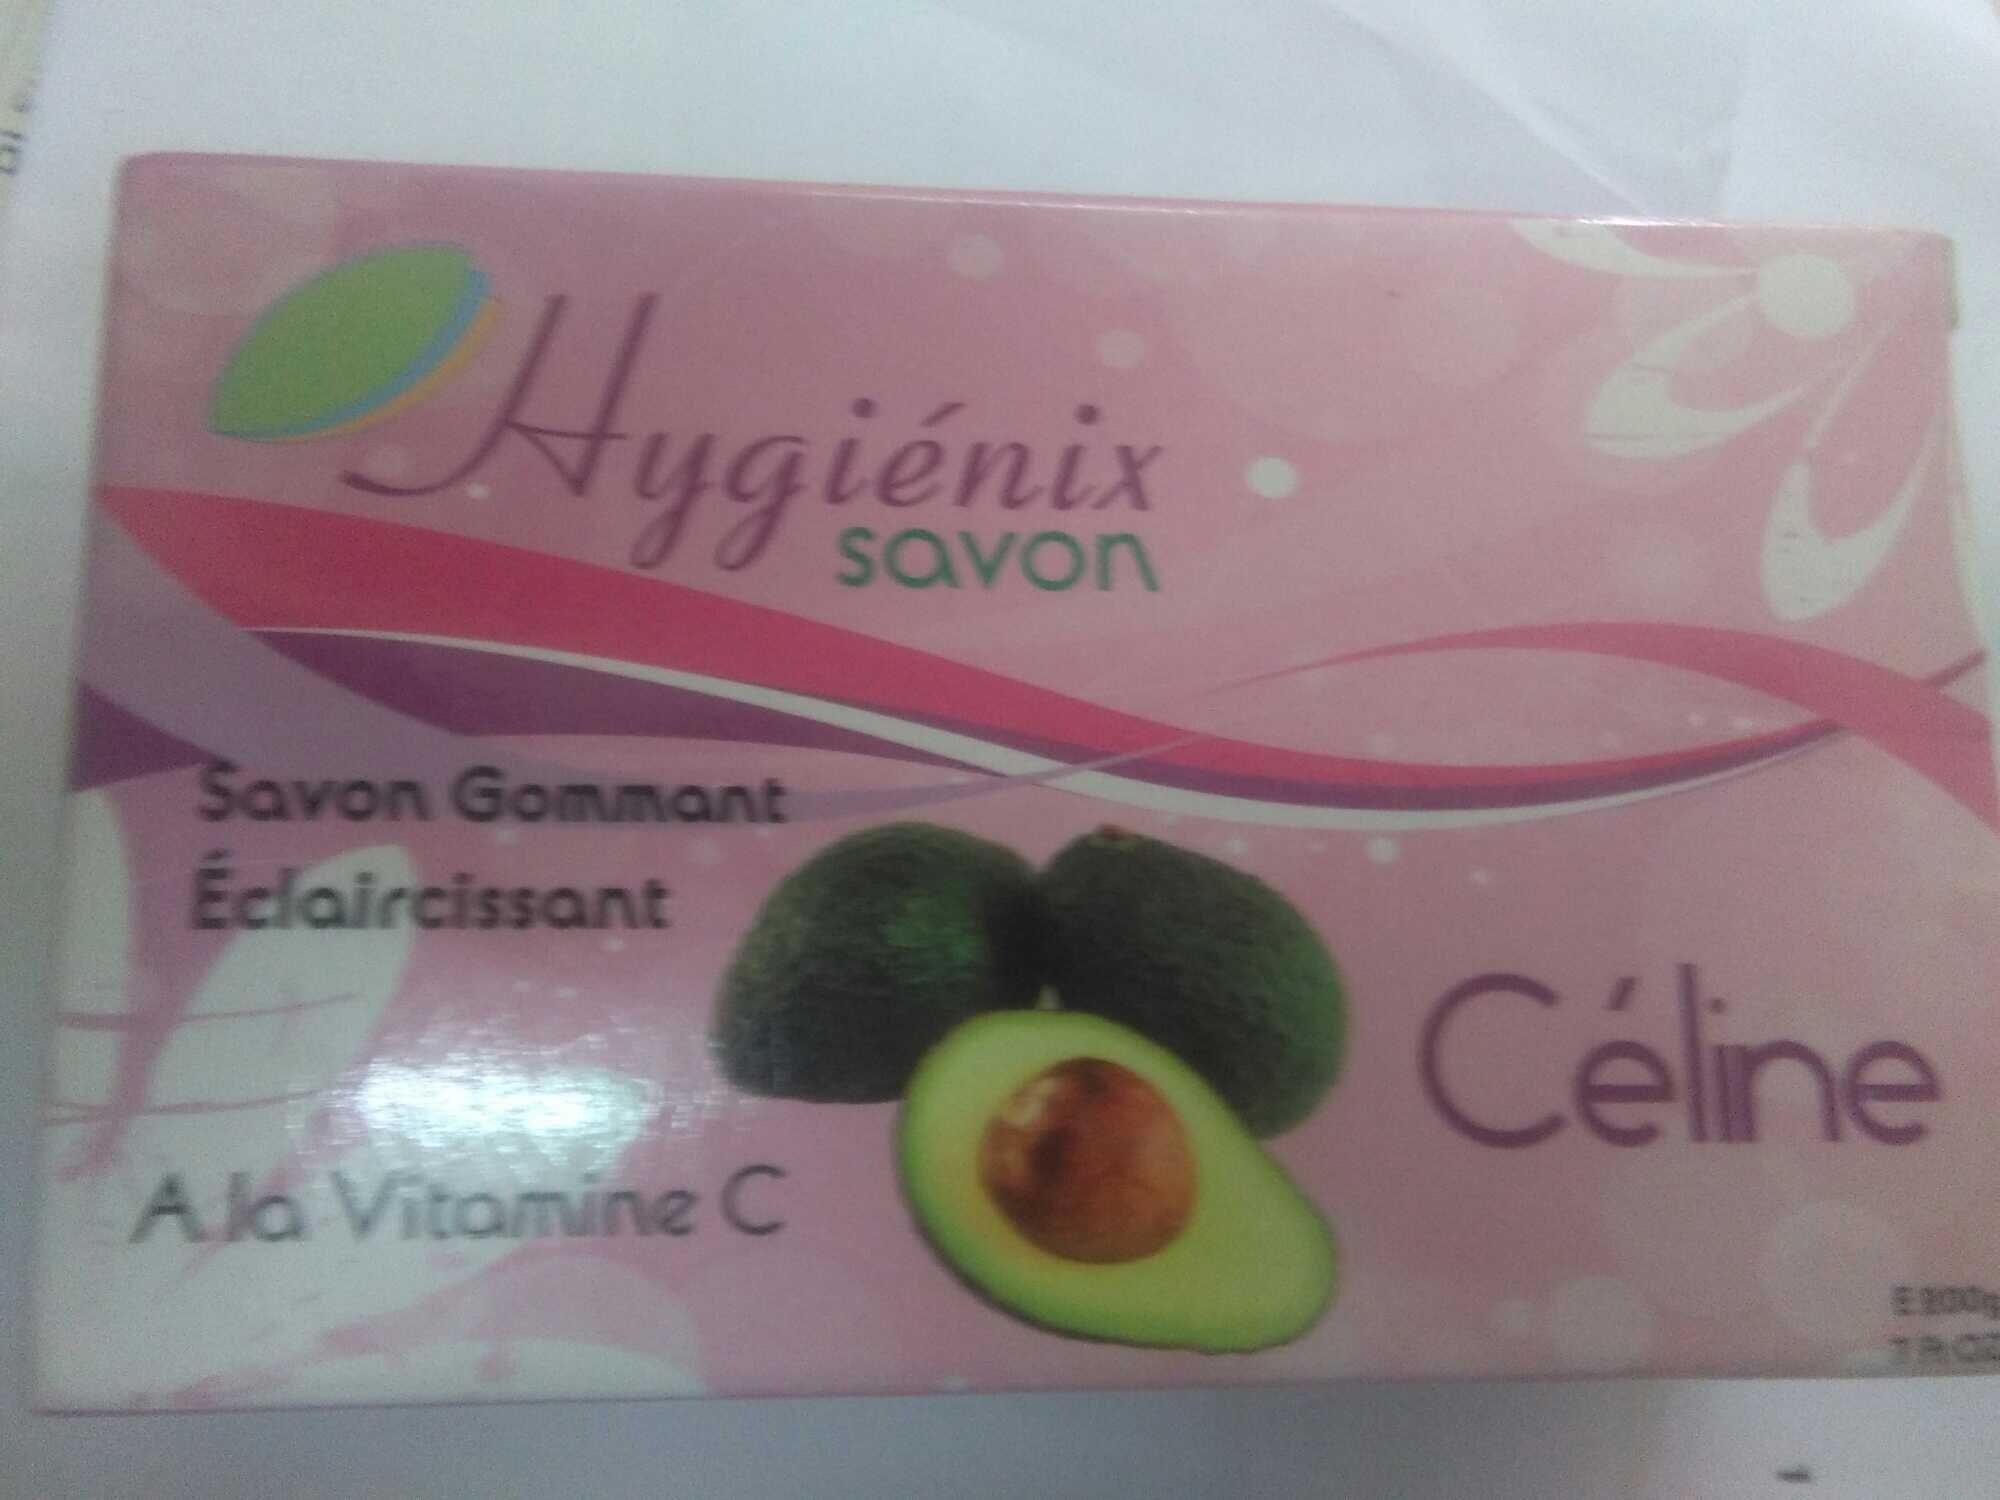 hygiénix savon - Produkt - fr